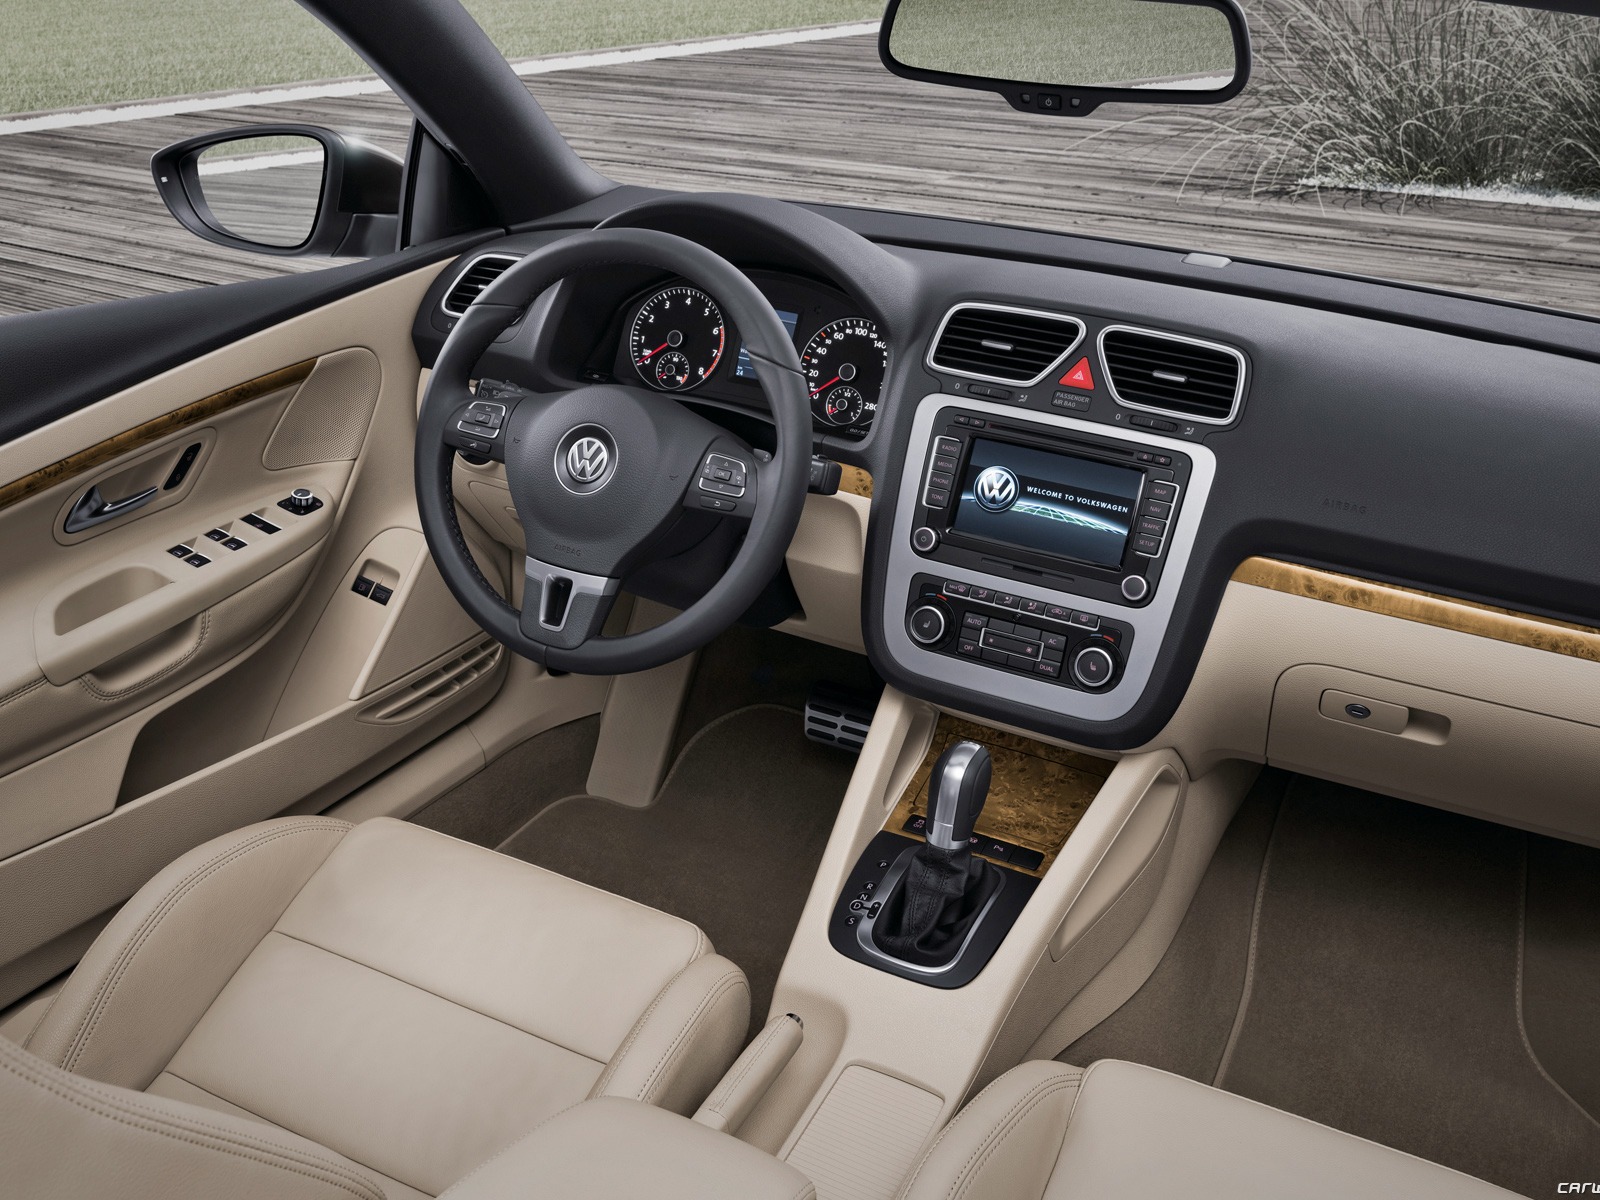 Volkswagen Eos - 2011 大眾 #15 - 1600x1200